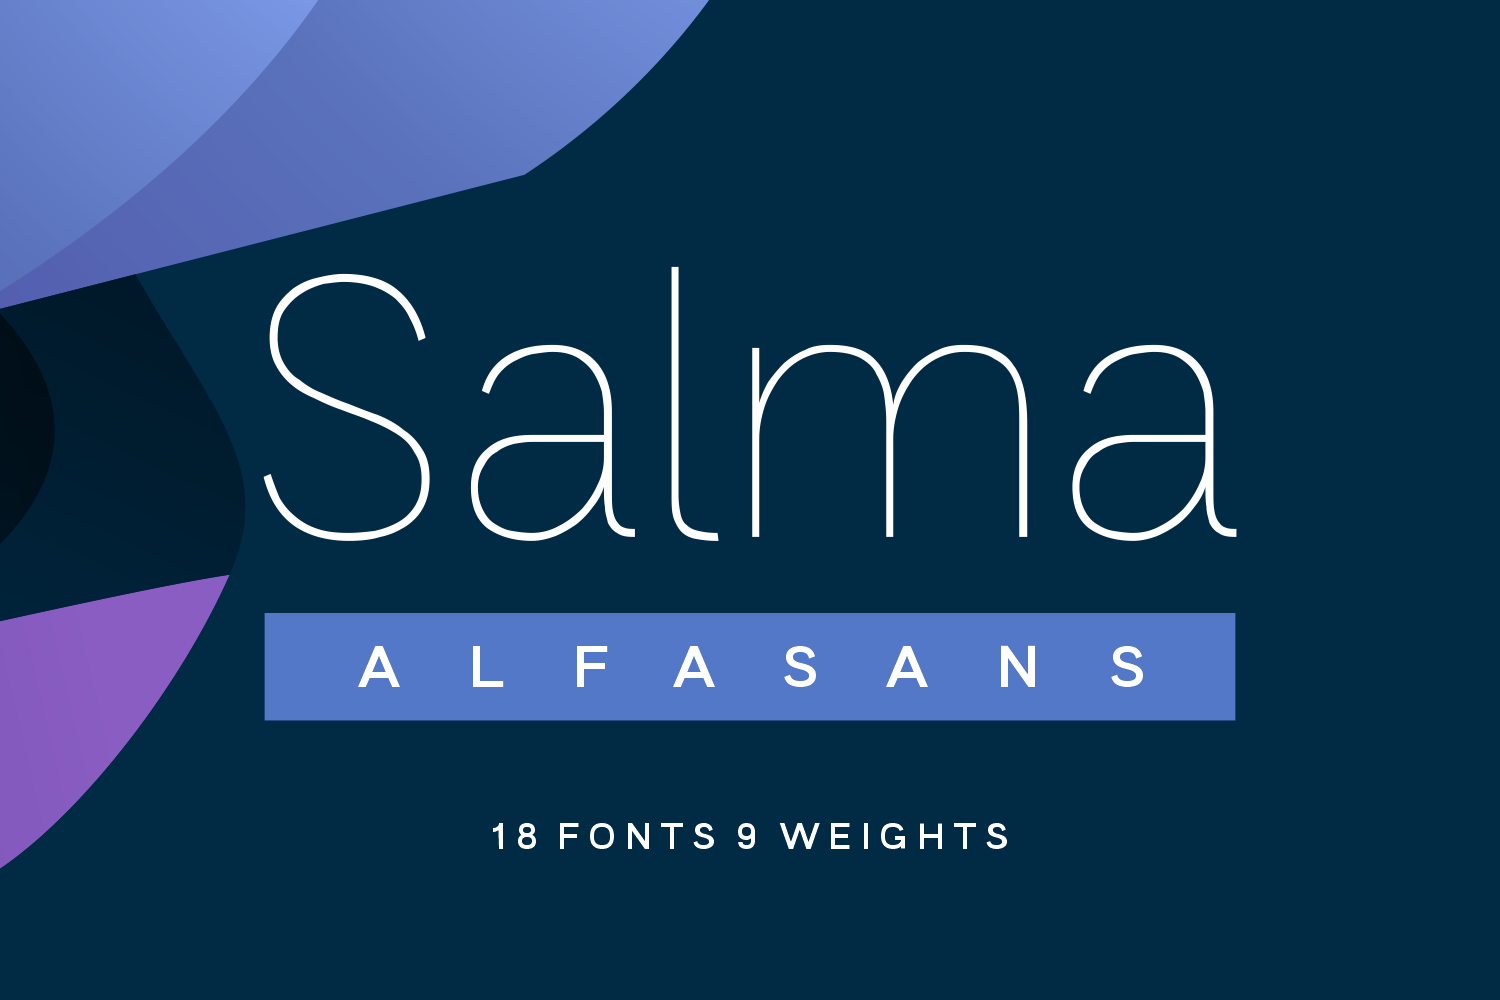 Salma Alfasans Light